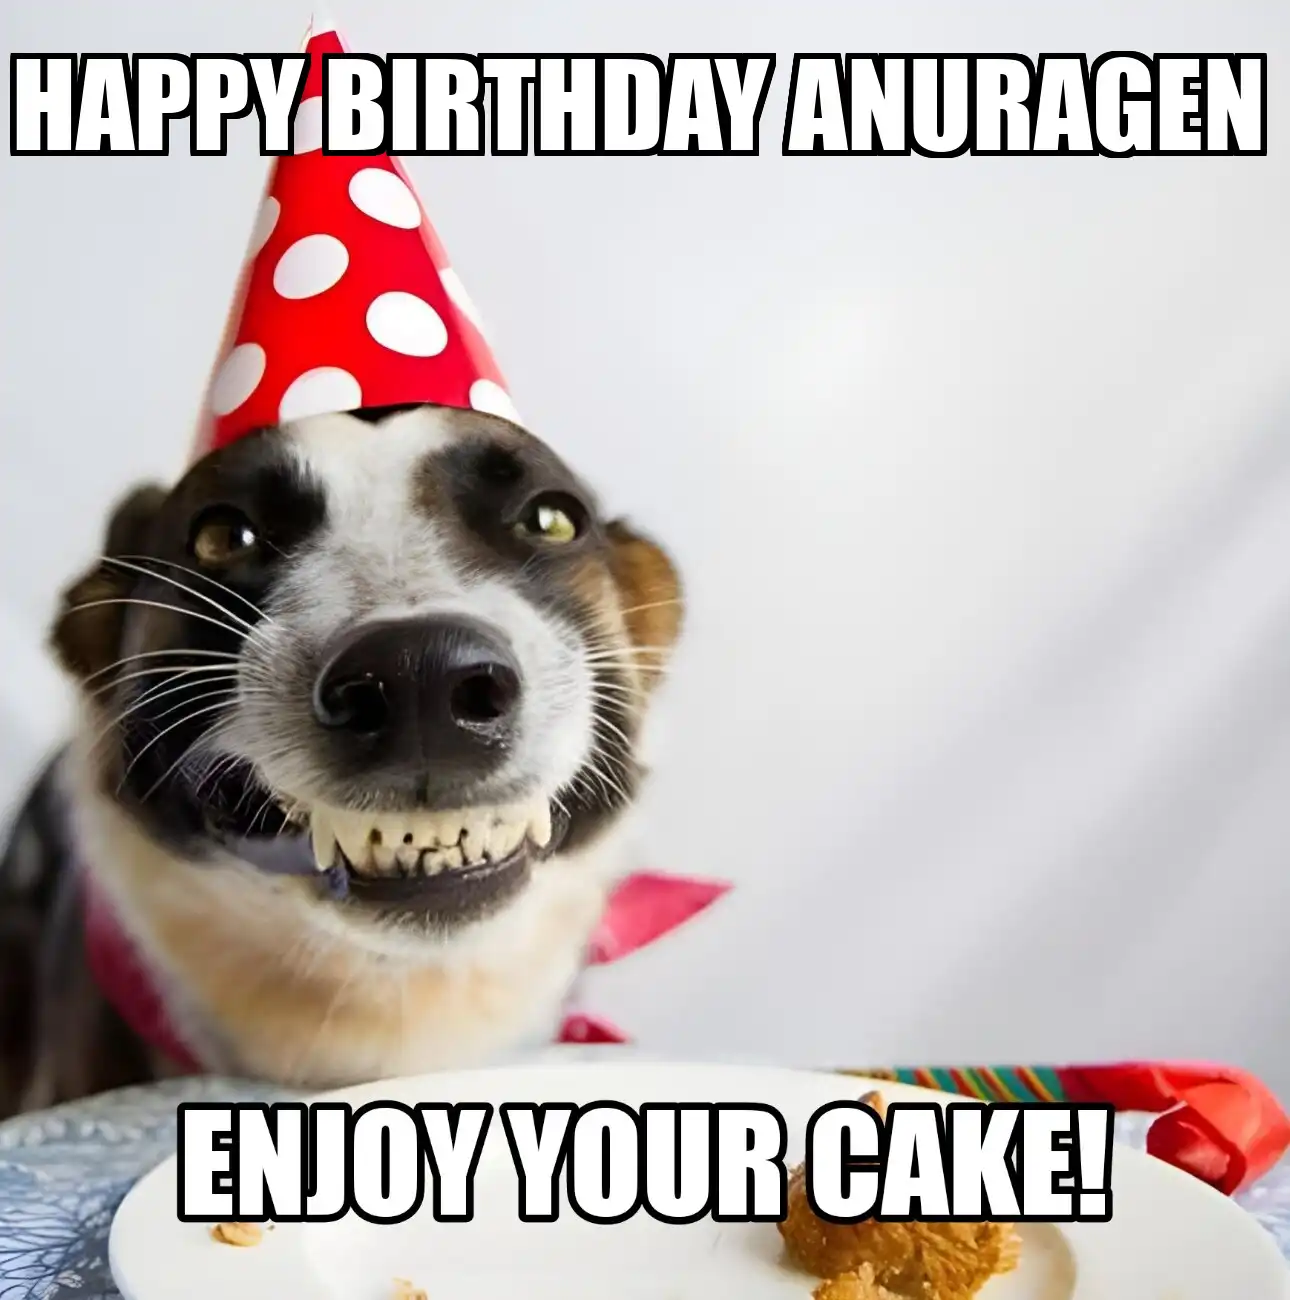 Happy Birthday Anuragen Enjoy Your Cake Dog Meme